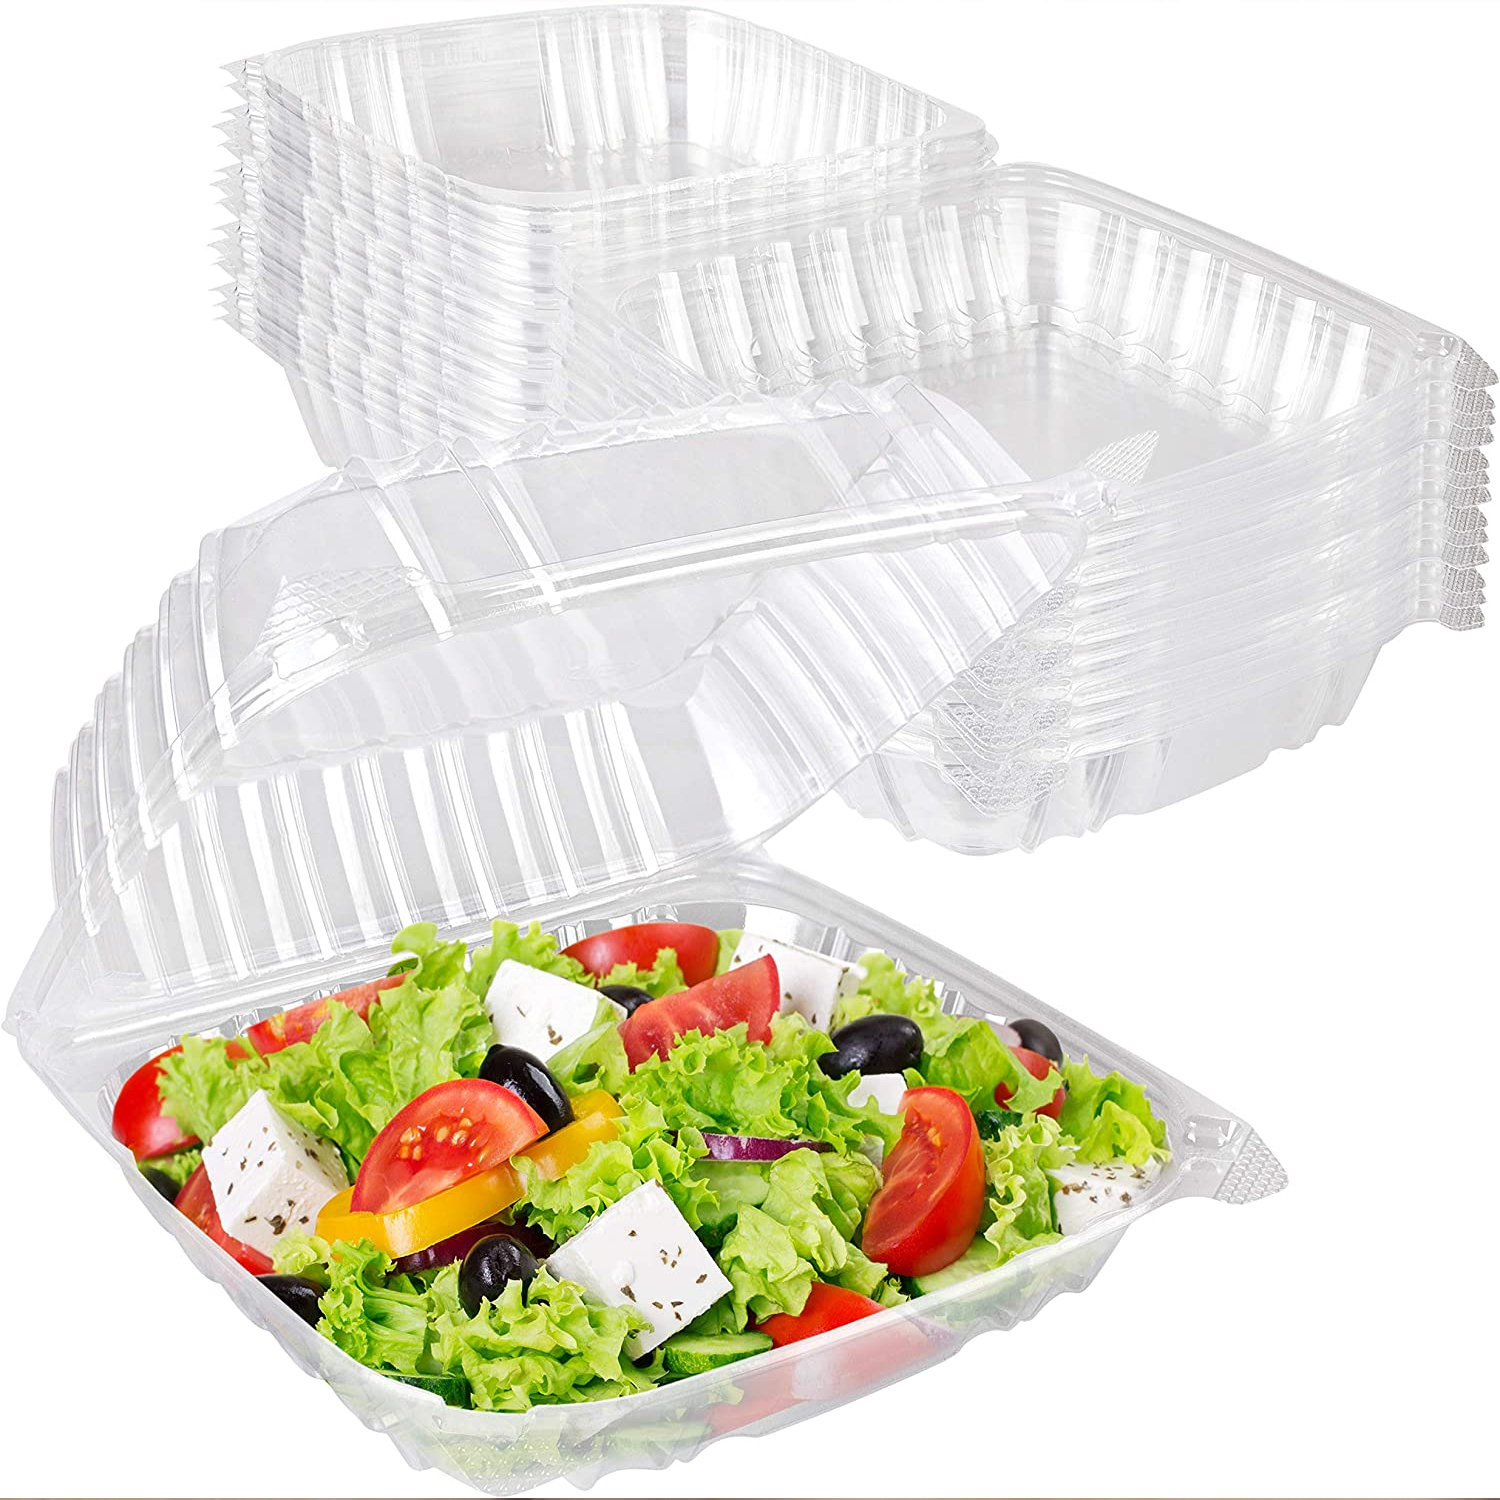 12 Wholesale Dispozeit Disposable Food Container 32 Oz / 8 Ct Rectangle (4  Lids + 4 Conts) - at 